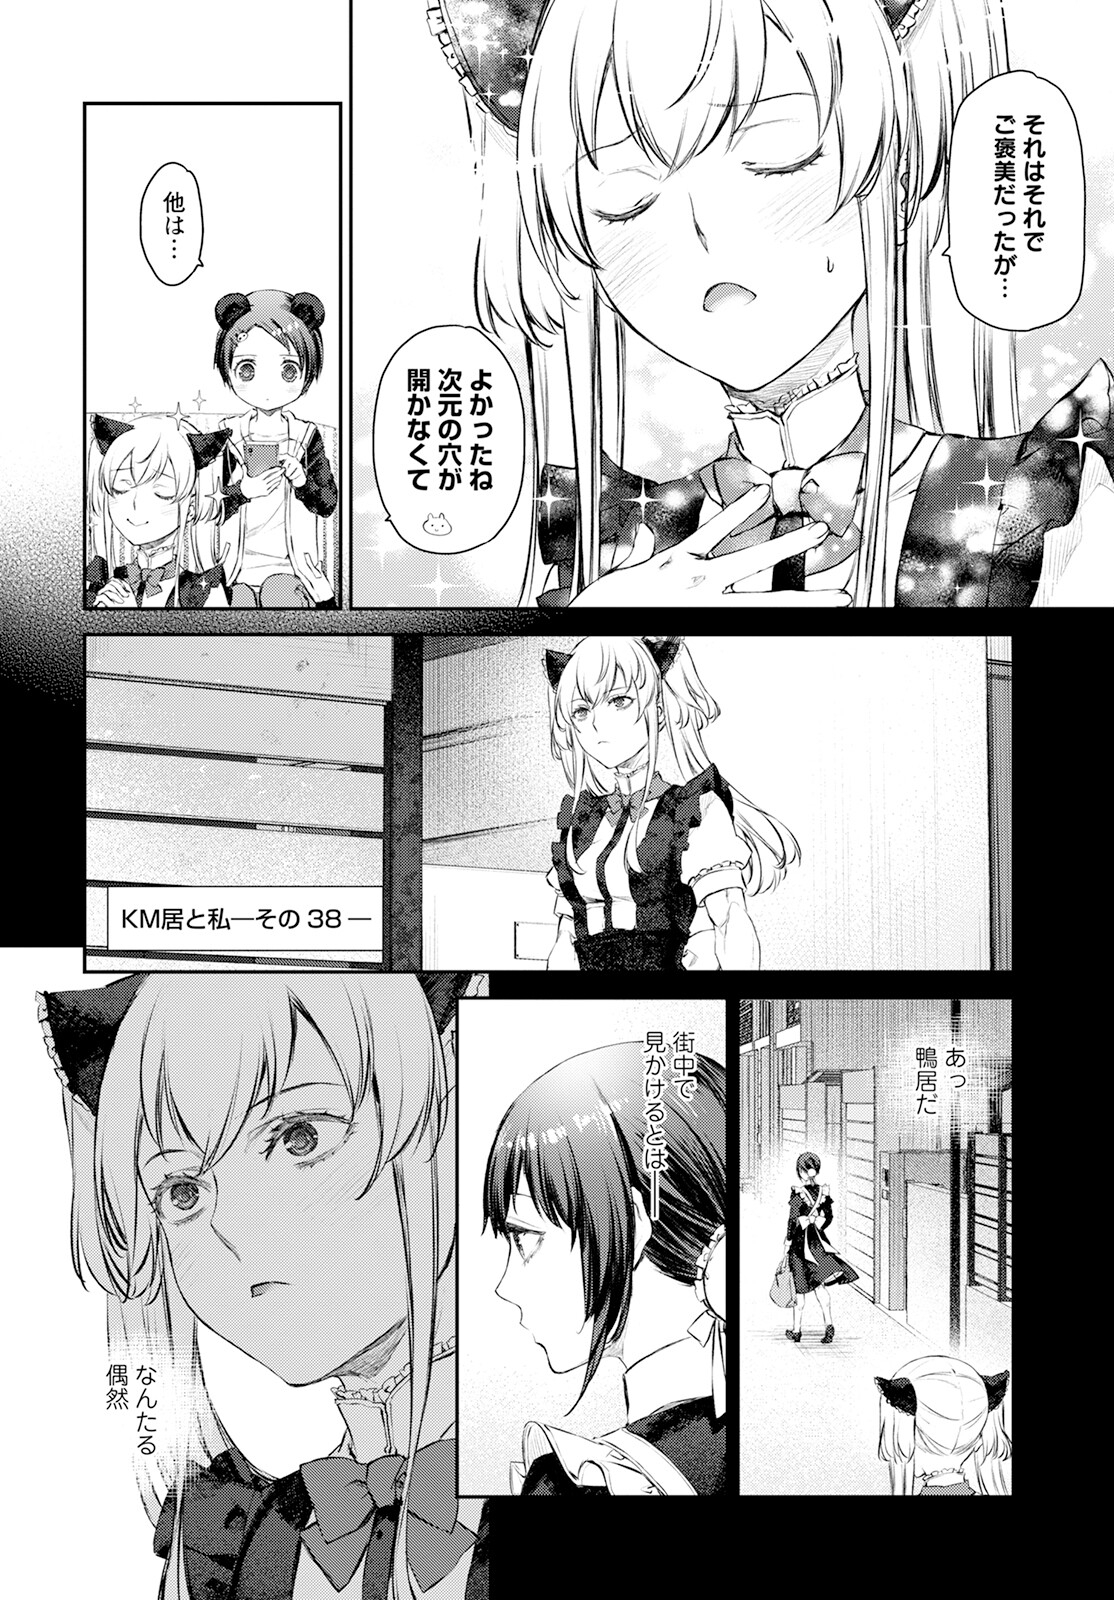 Uchi no Maid ga Uzasugiru! - Chapter 56 - Page 14